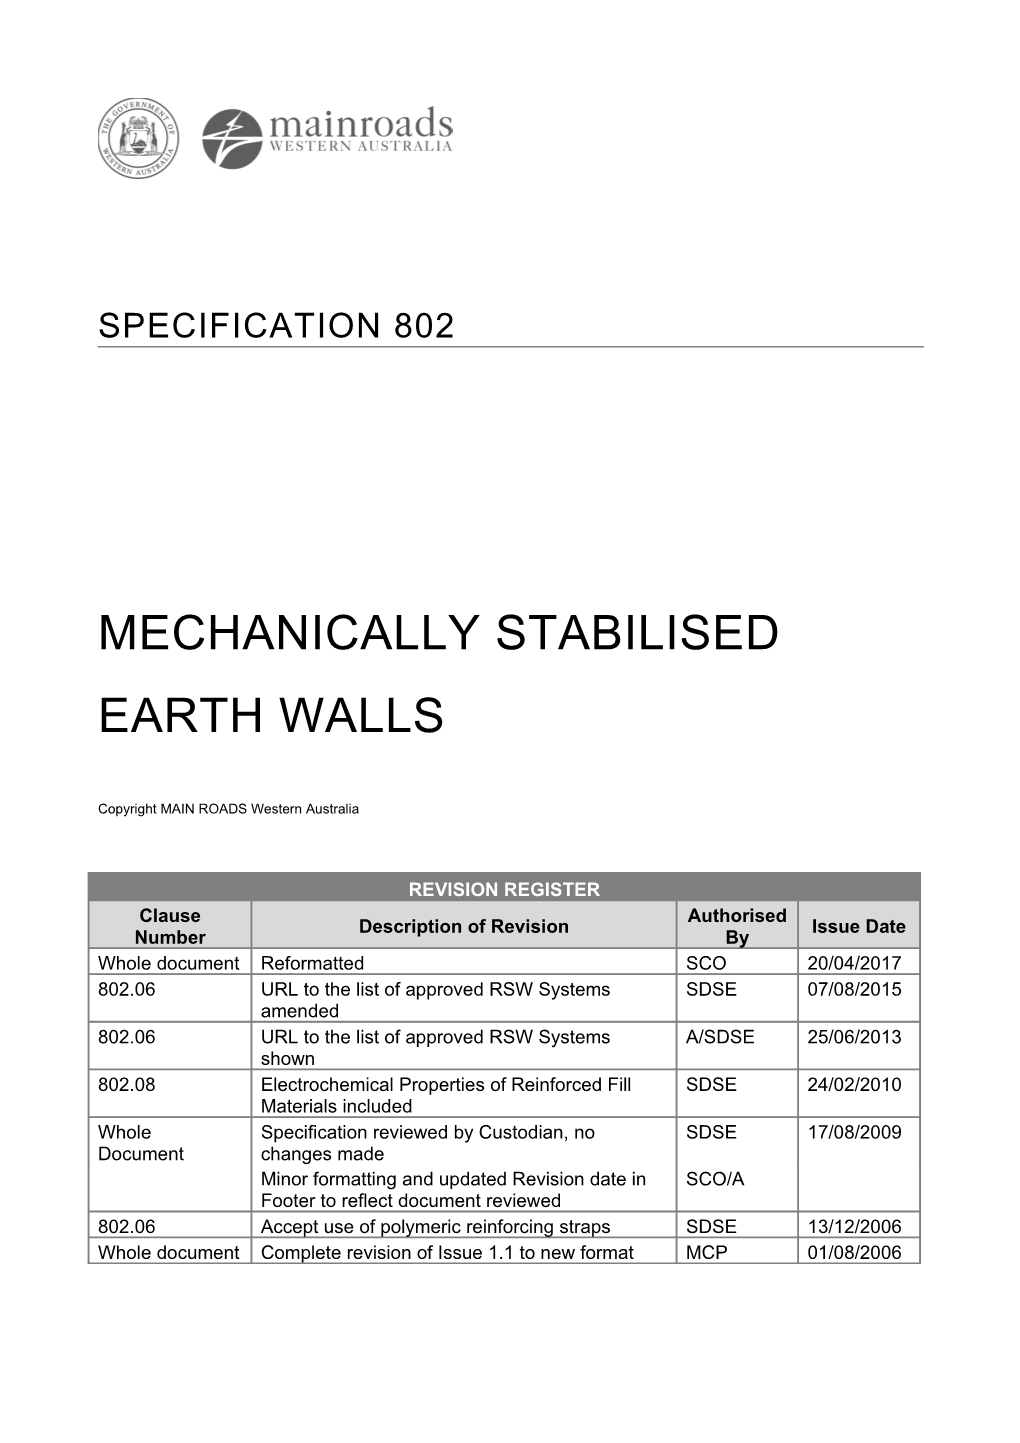 Mechanically Stabilised Earth Walls